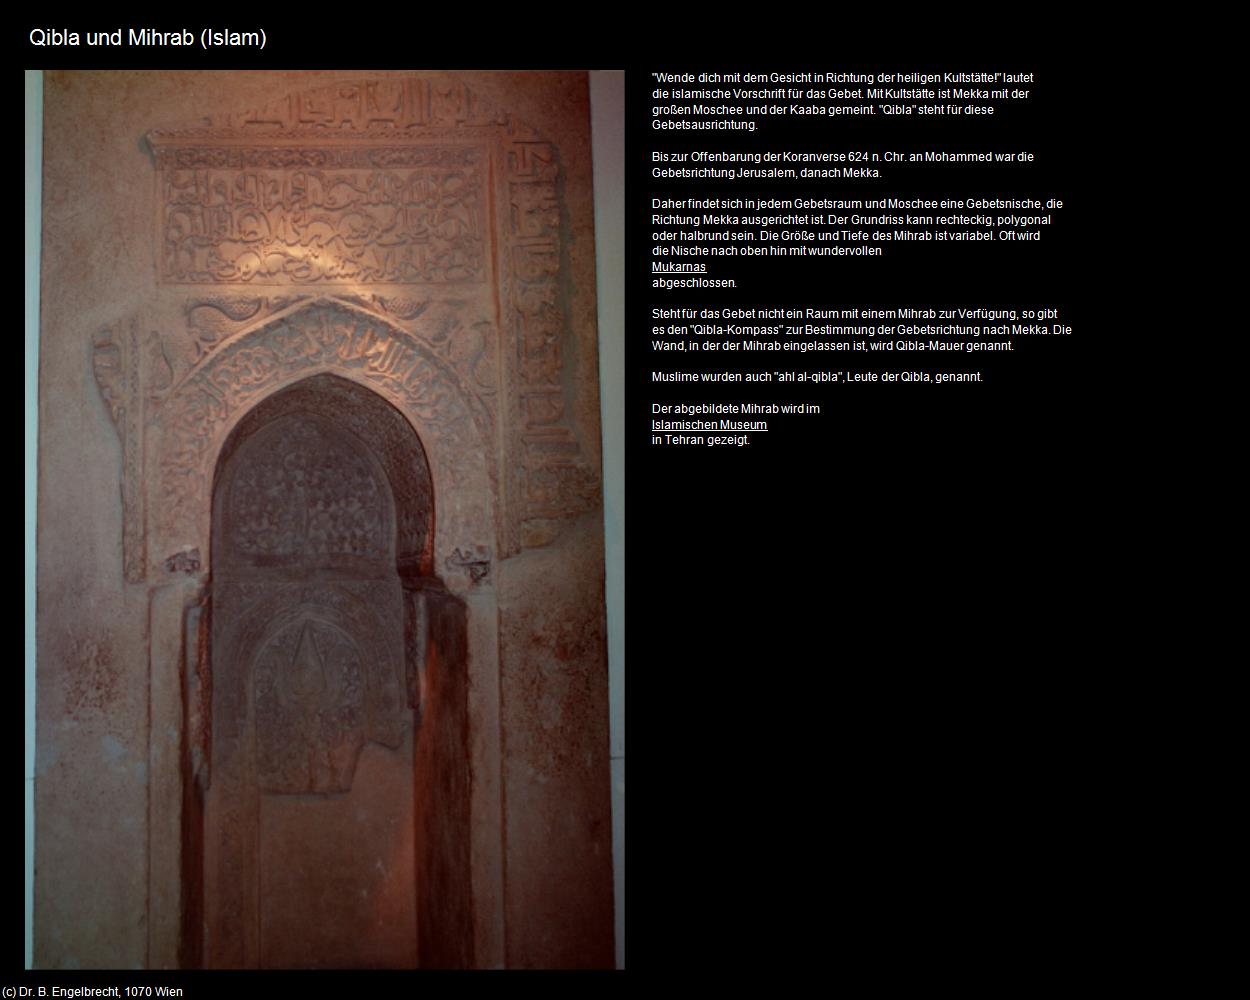 Qibla und Mihrab (IRAN-Religion II - Islam) in Iran(c)B.Engelbrecht